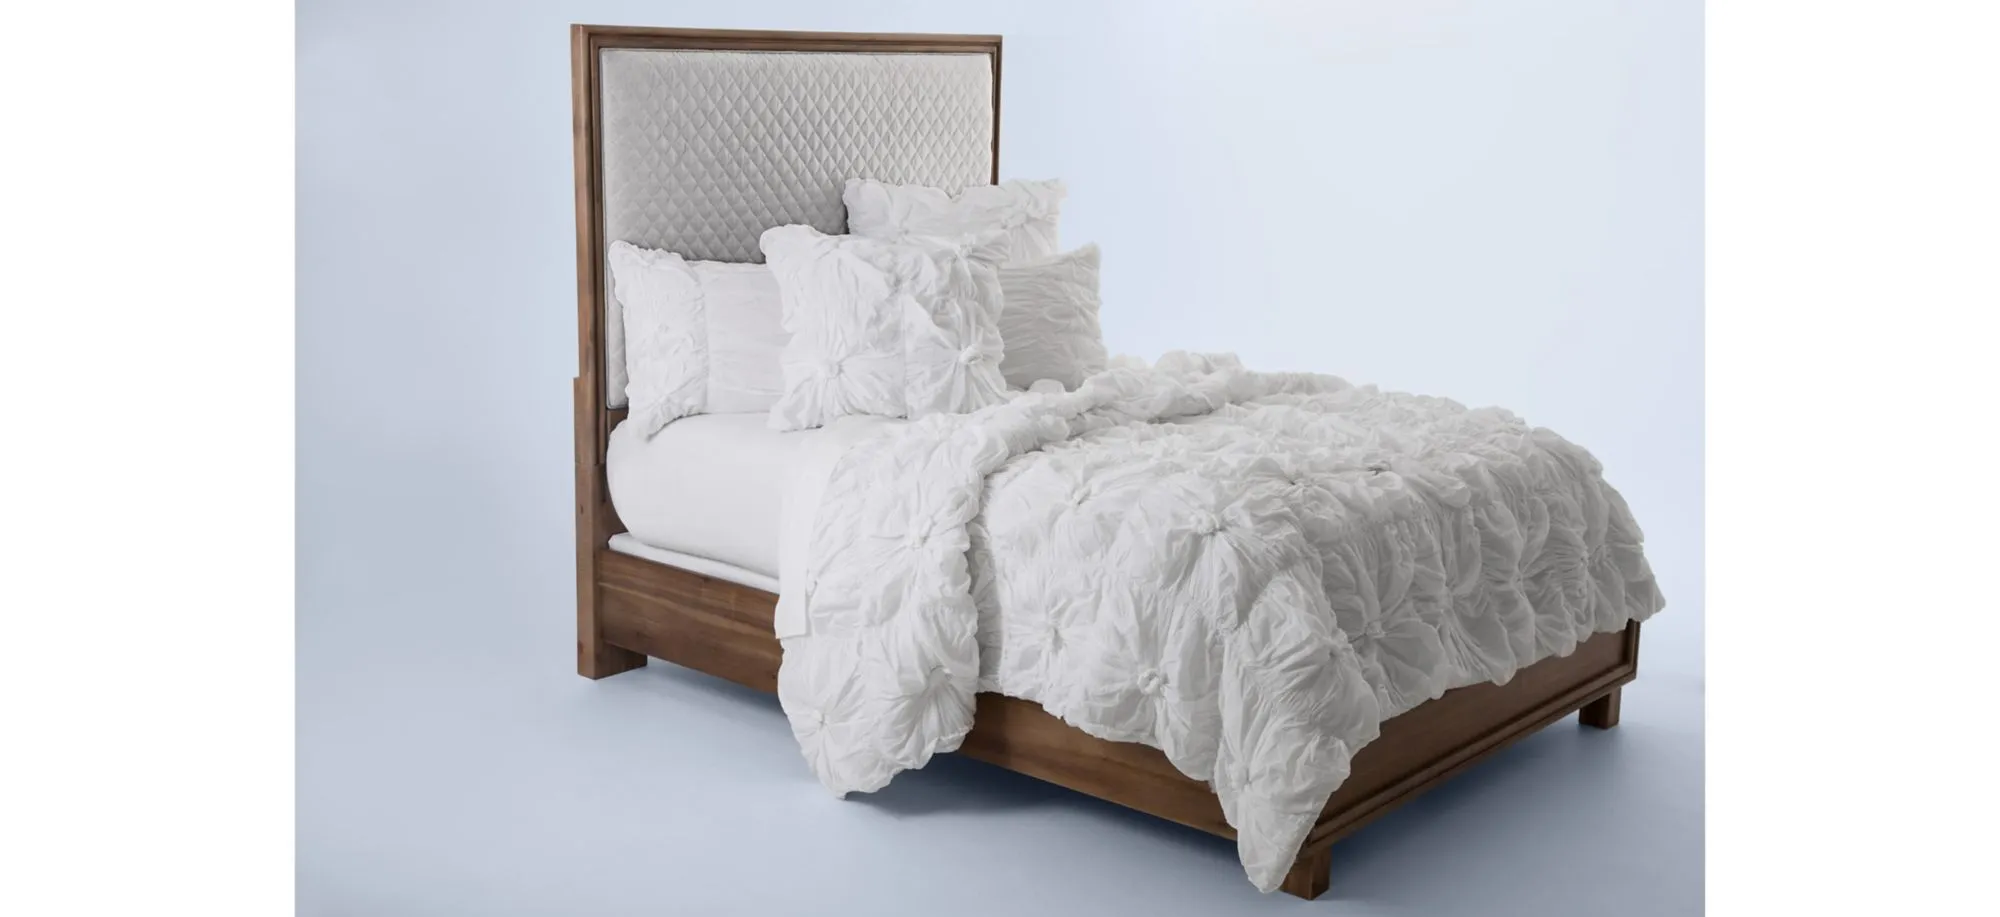 Savanna 2-Piece Comforter Set in White by Amini Innovation